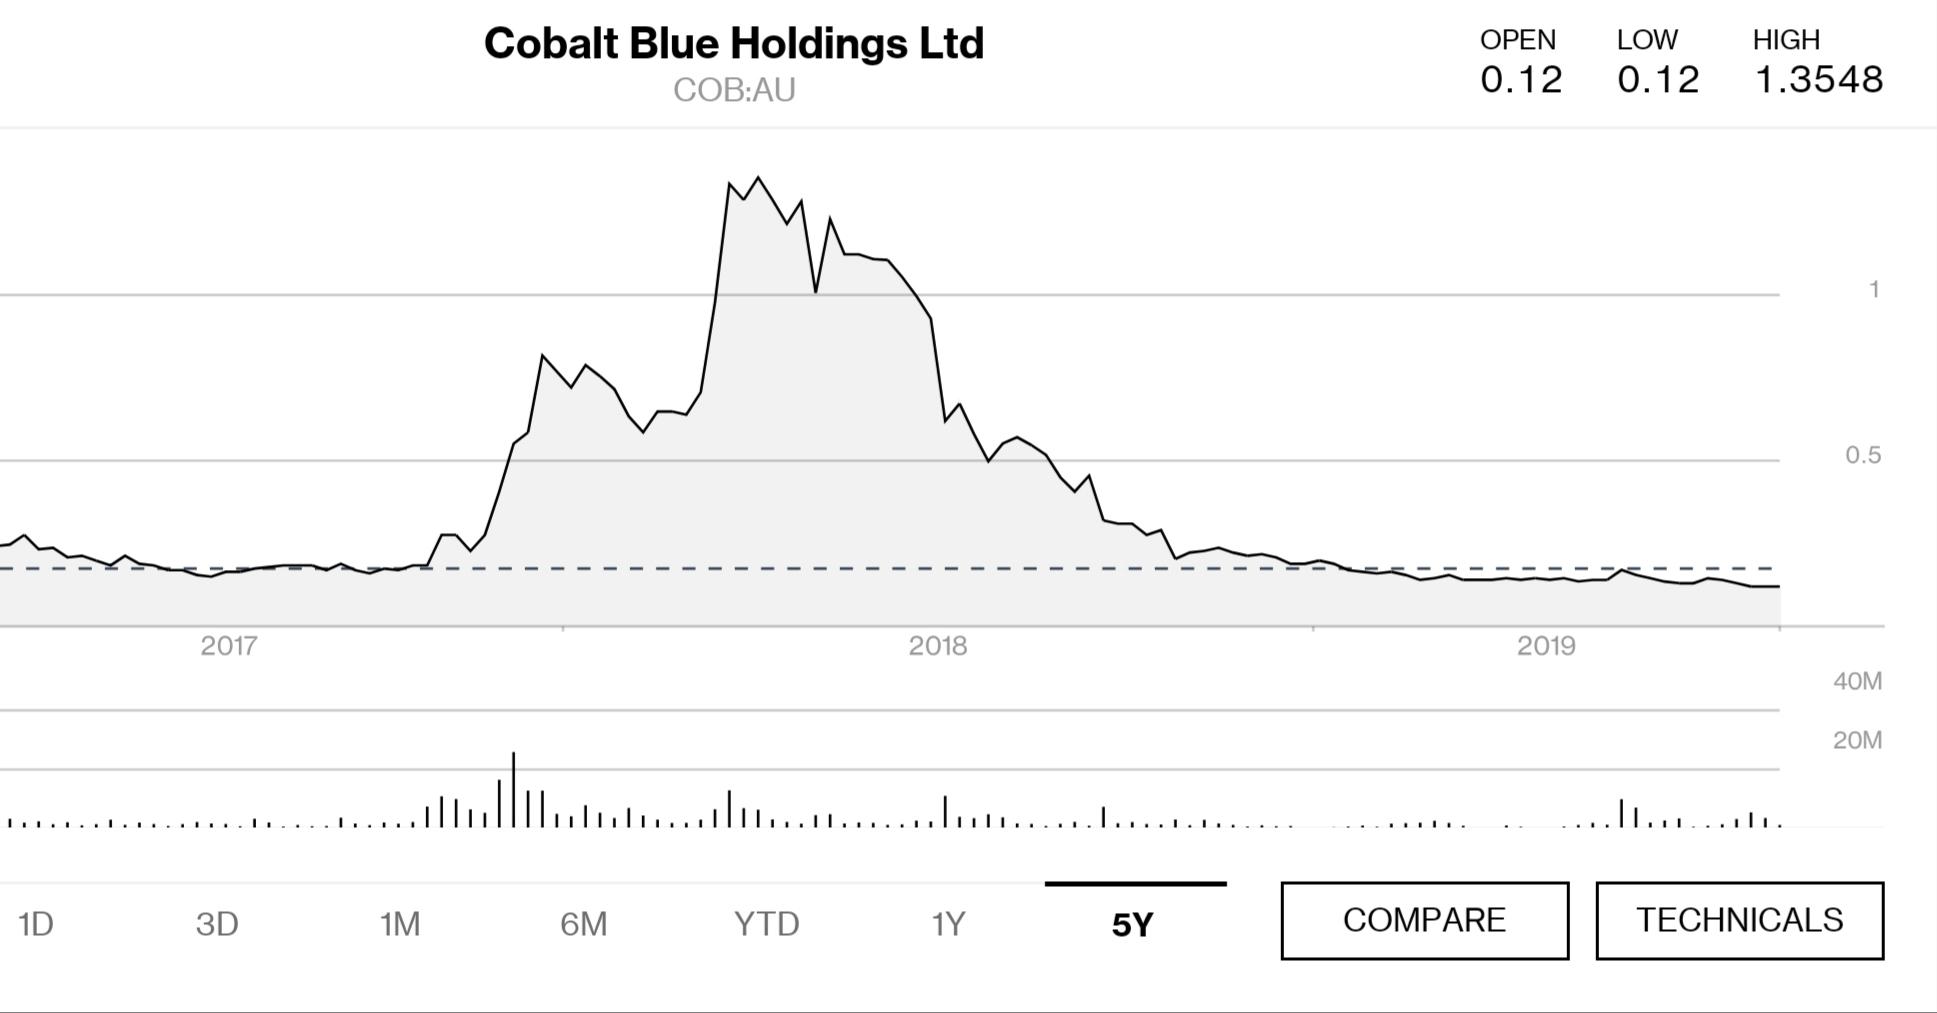 Cob Price Chart